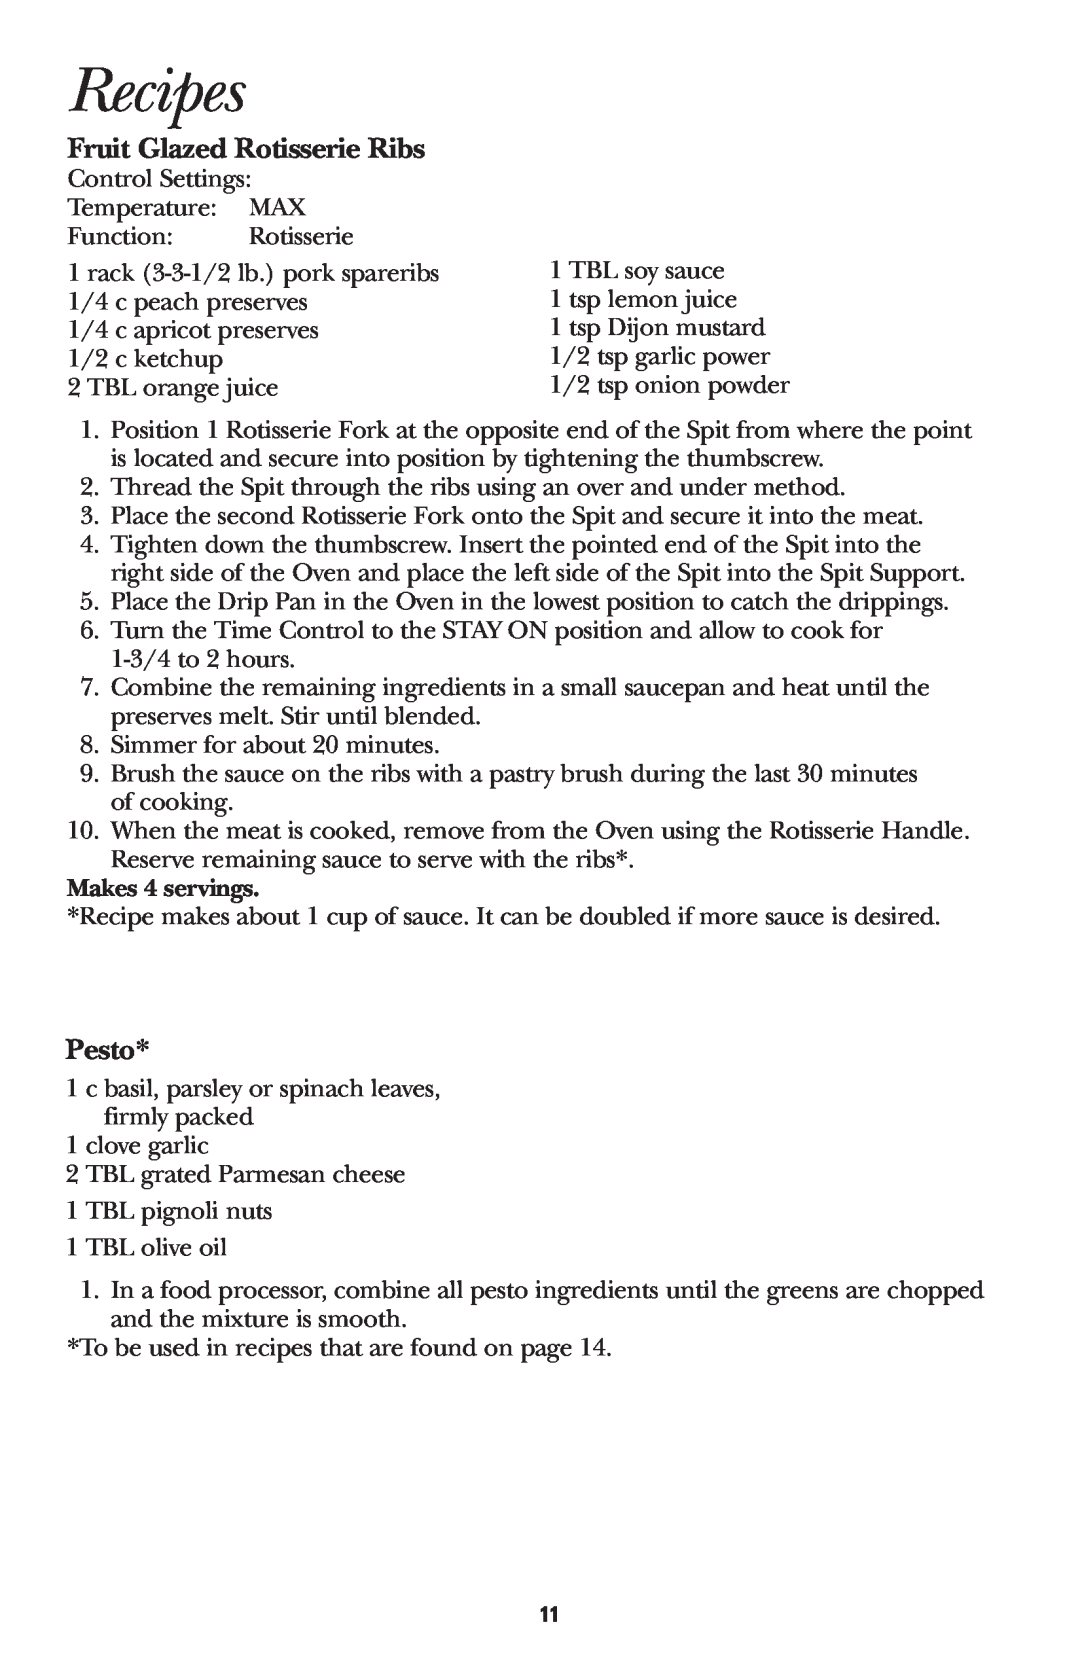 GE 168947 manual Recipes, Fruit Glazed Rotisserie Ribs, Pesto, Makes 4 servings 